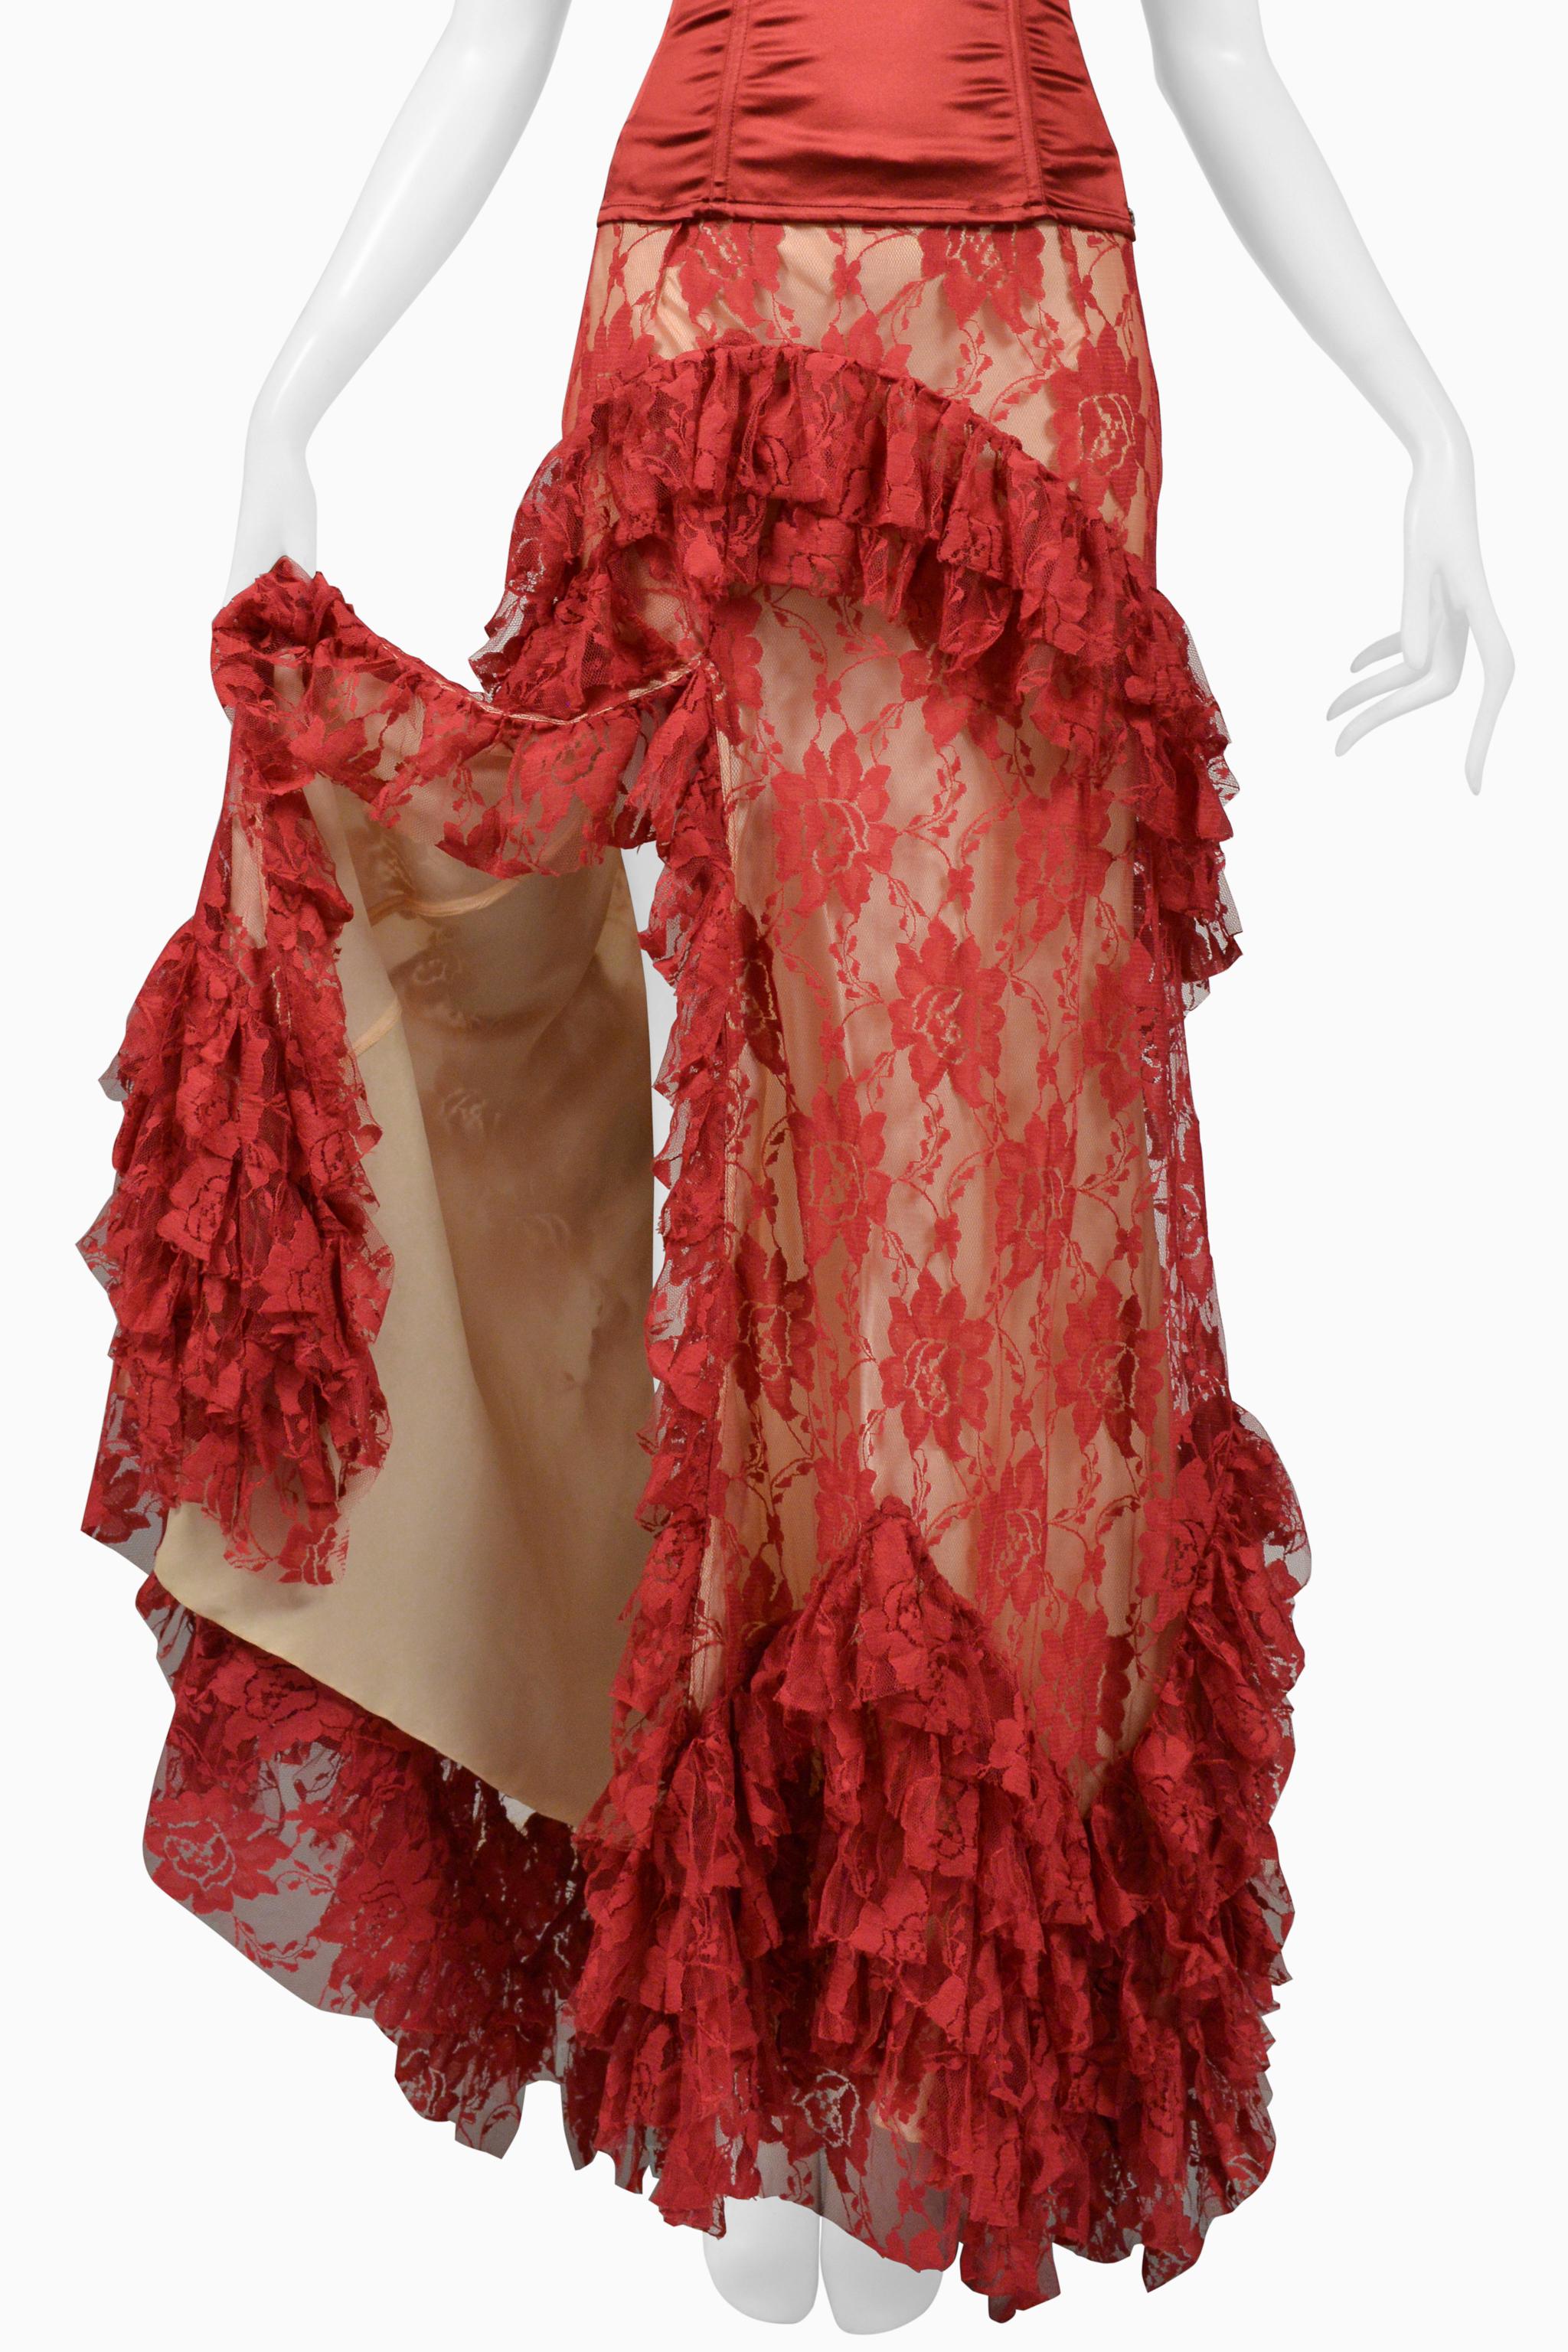 John Galliano Burgundy Lace Ballgown Skirt & Corset Top For Sale 5